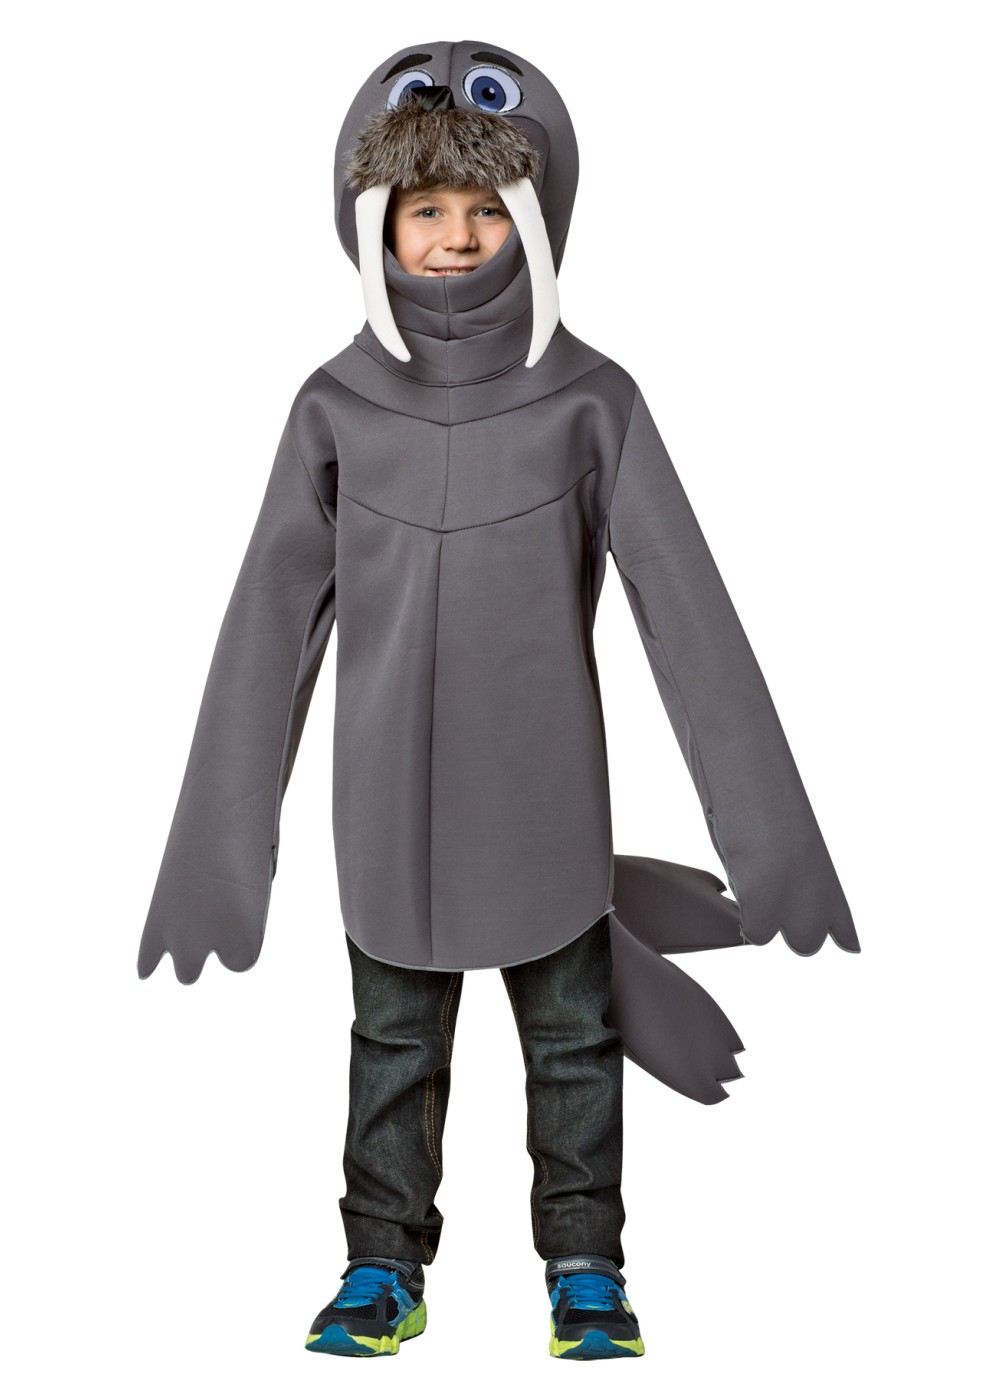 Toddler Gray Walrus Costume